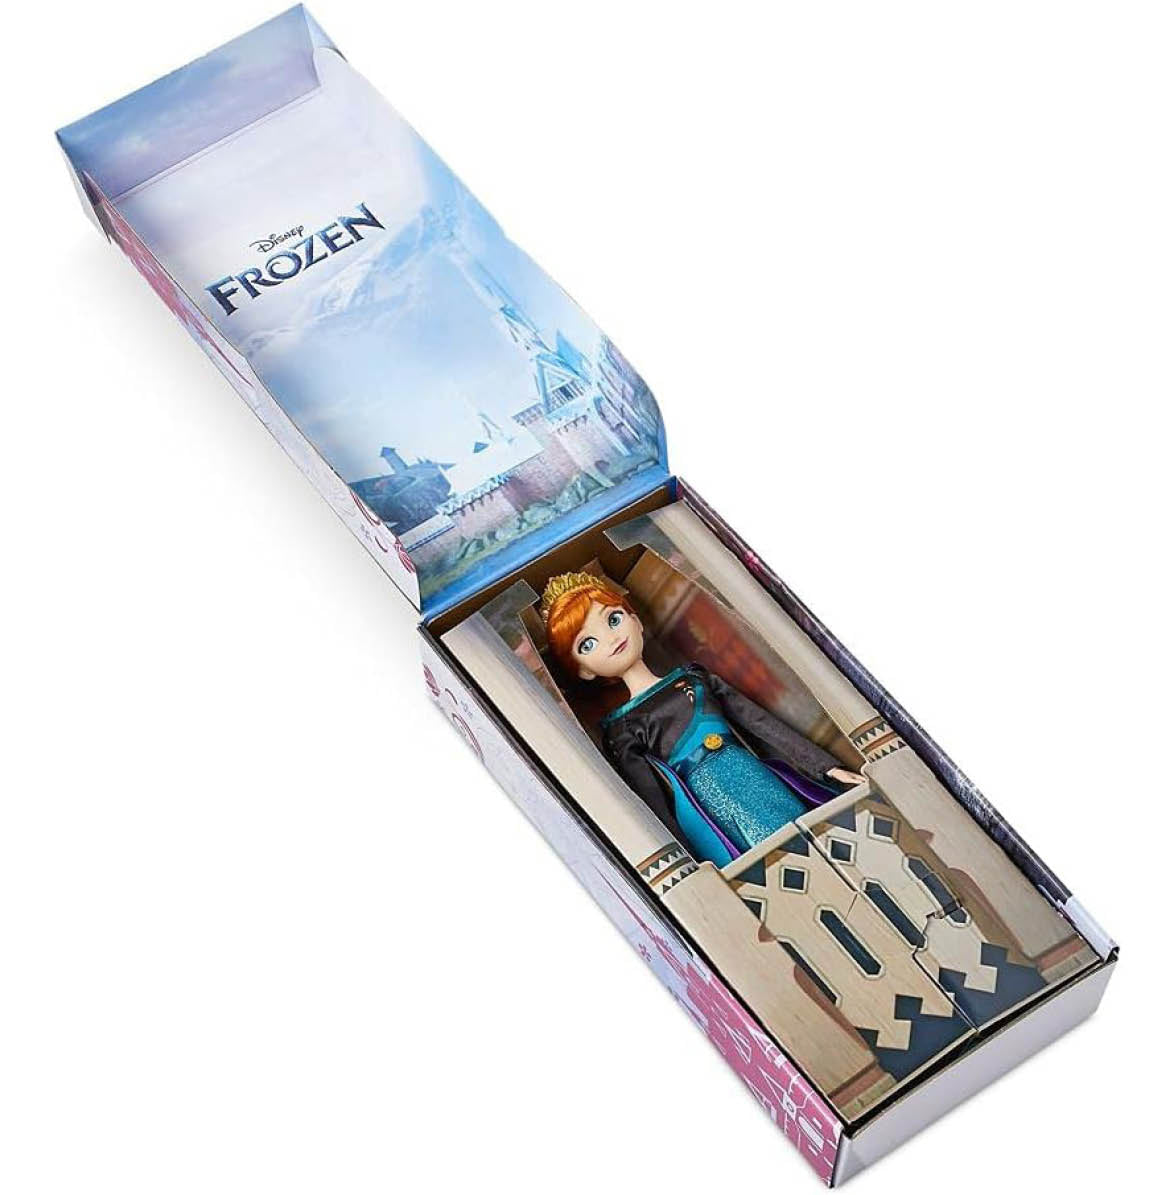 Disney Frozen Anna Classic Doll in box